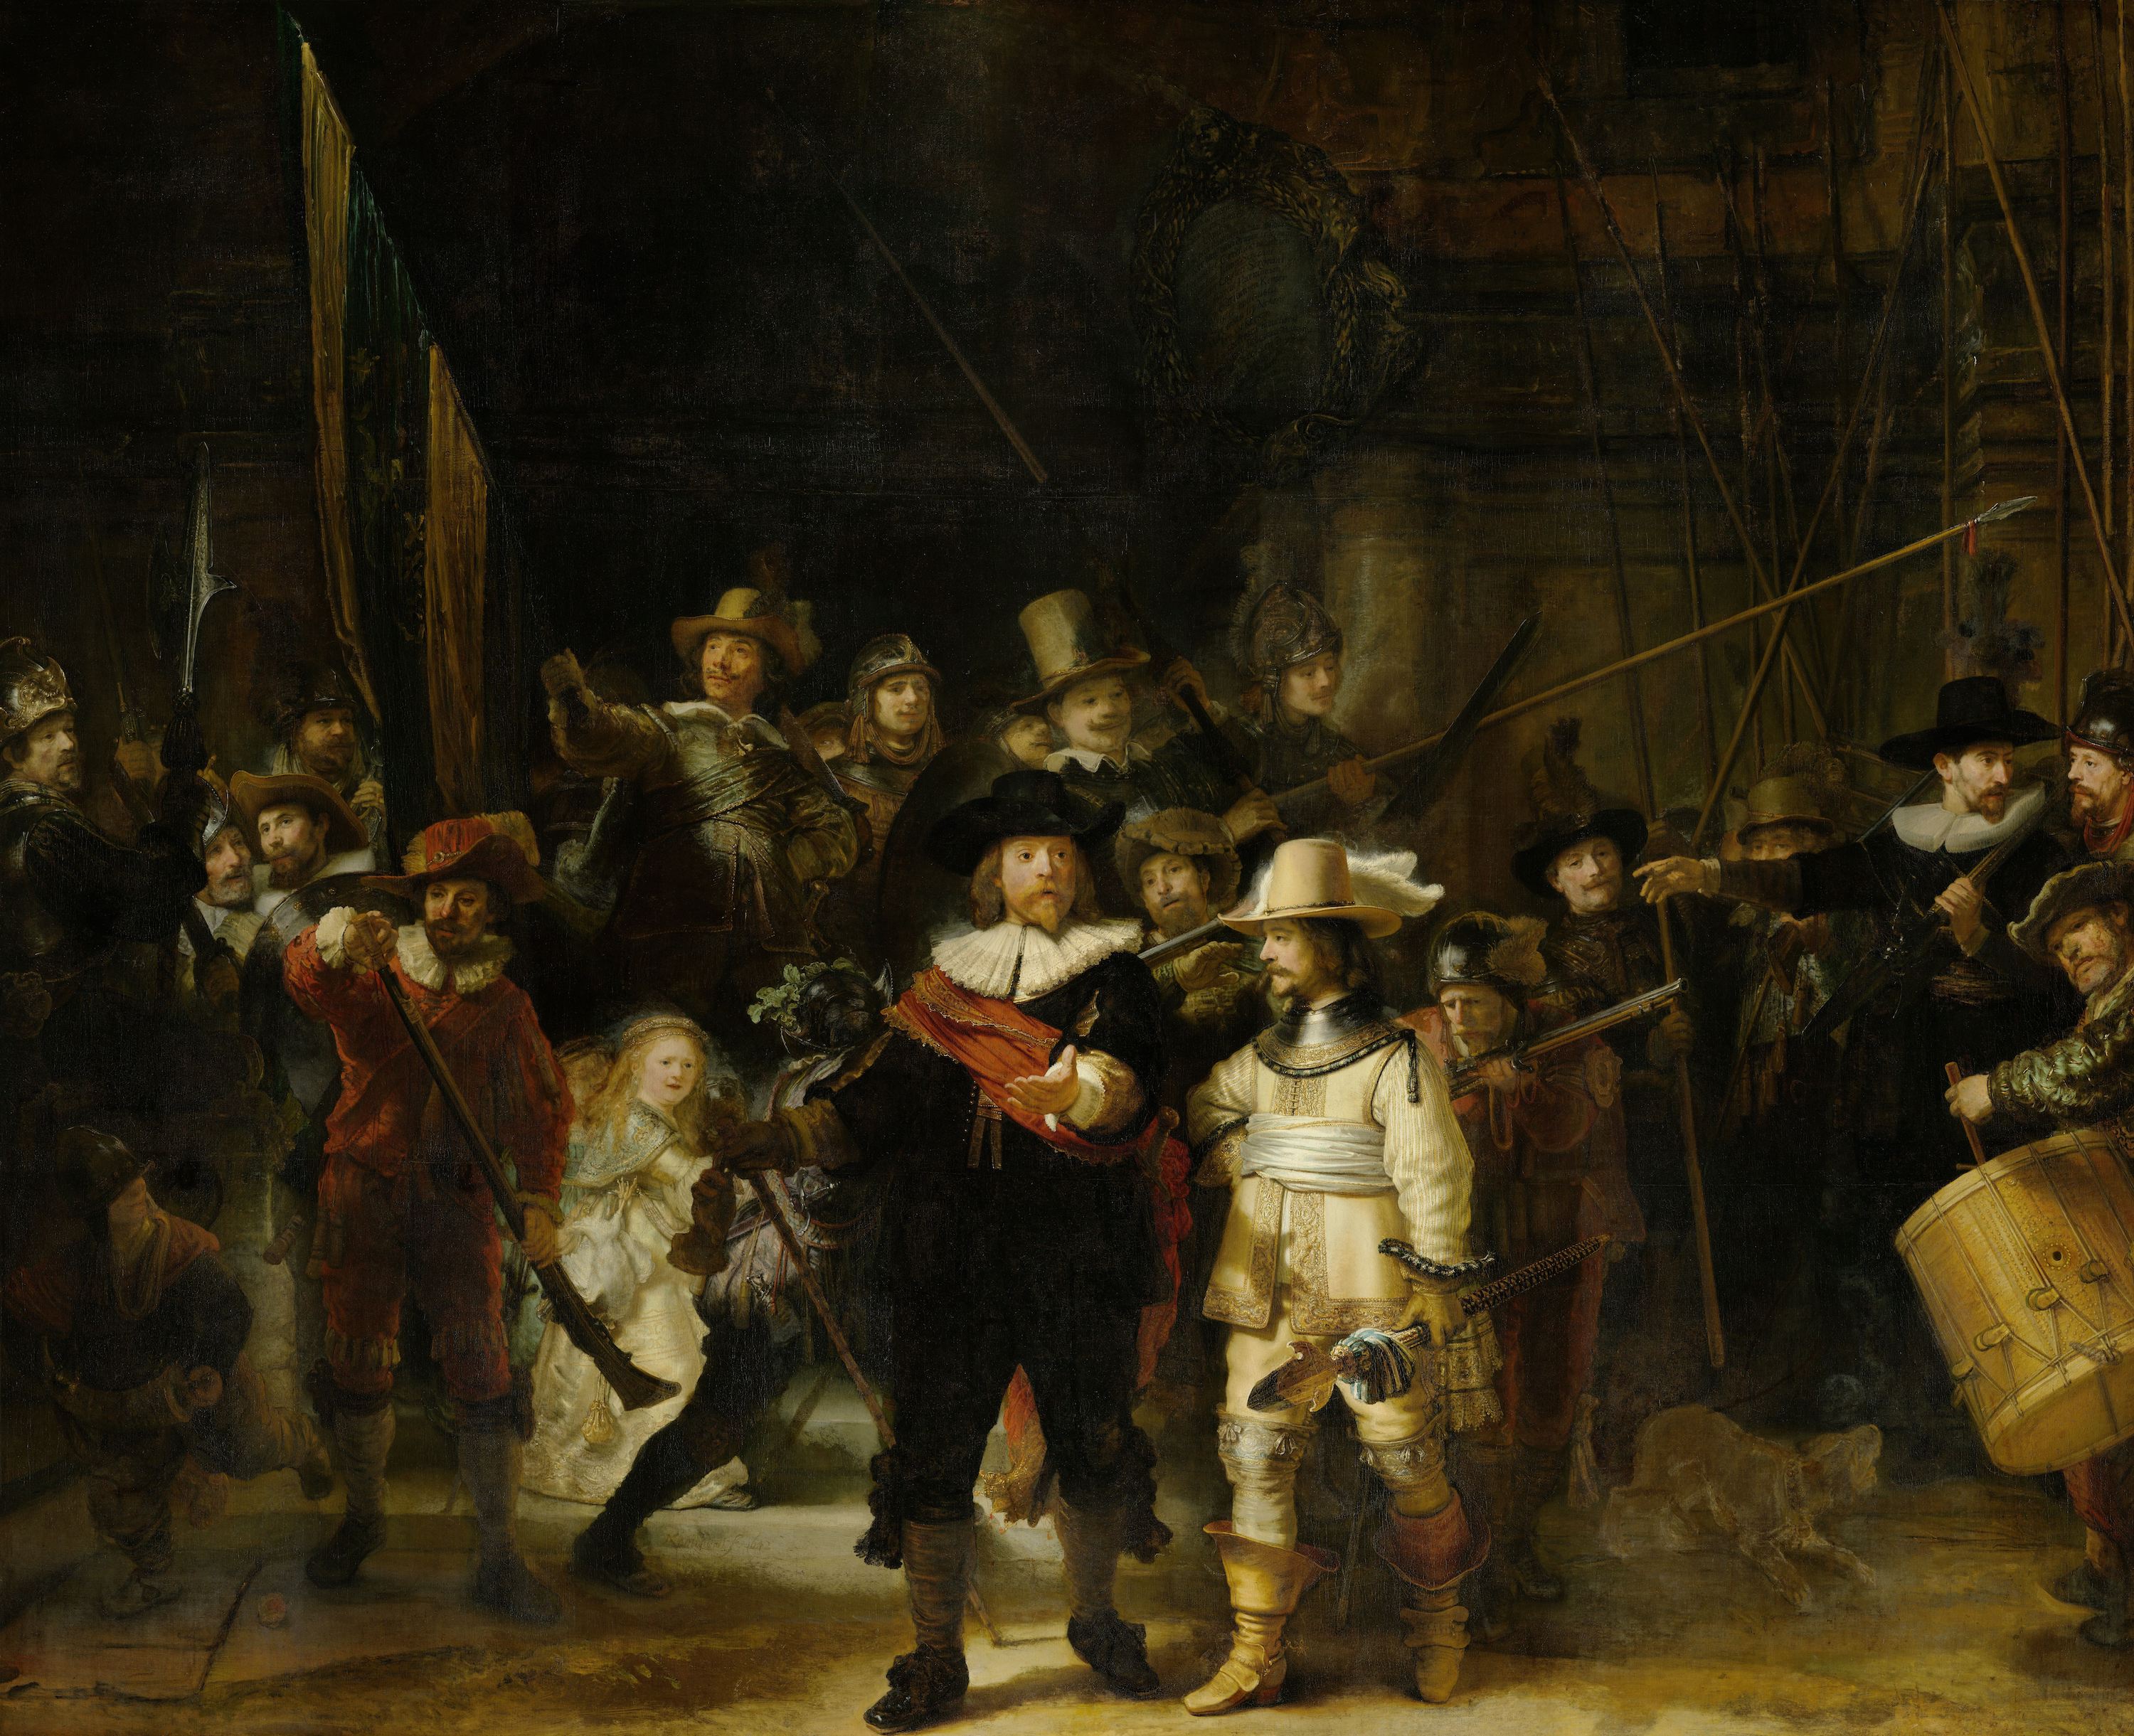 Straż Nocna by Rembrandt van Rijn - 1642 - 363 × 437 cm 